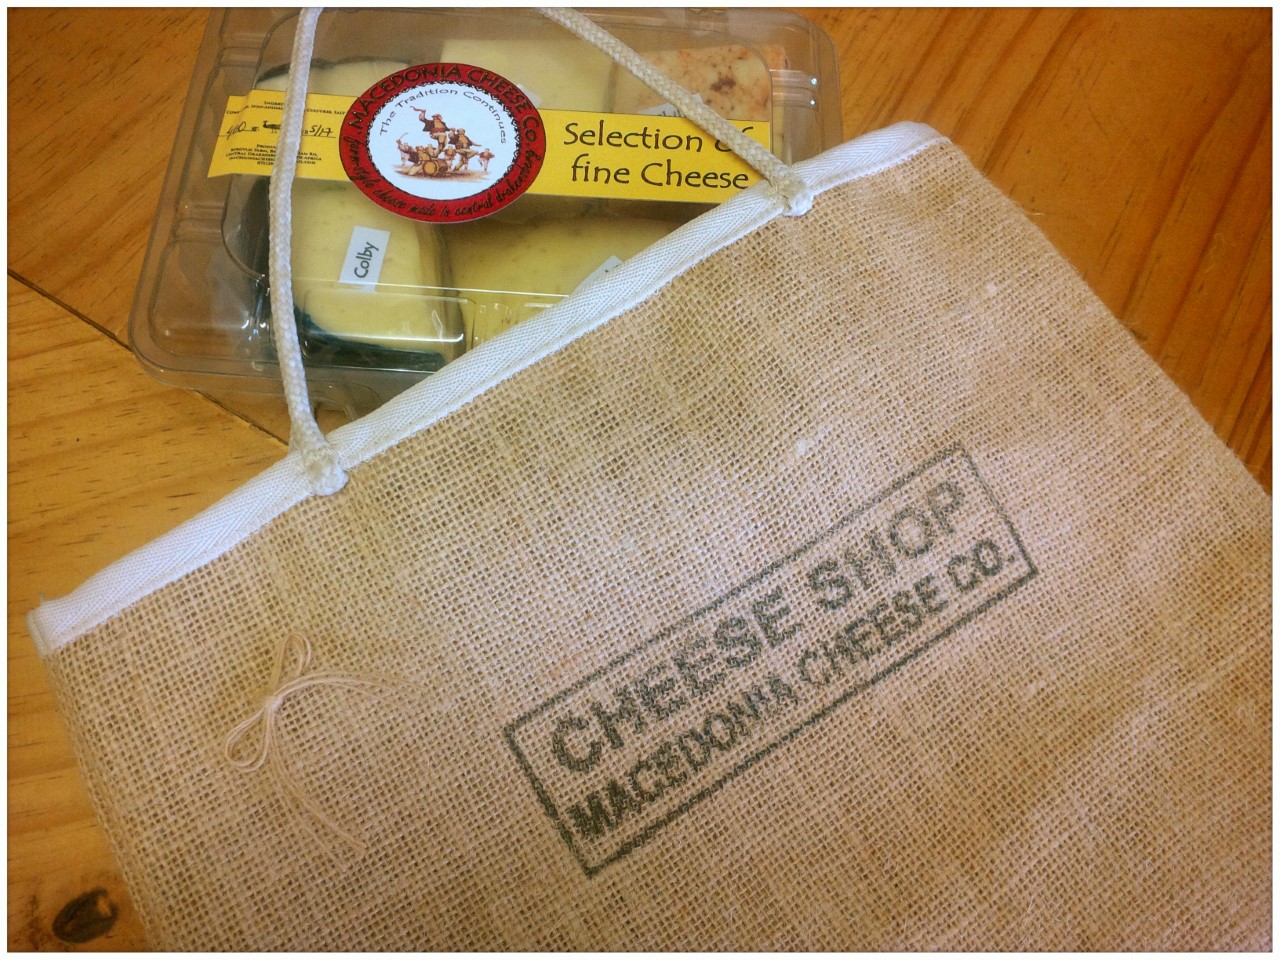 Macedonia Cheese Company